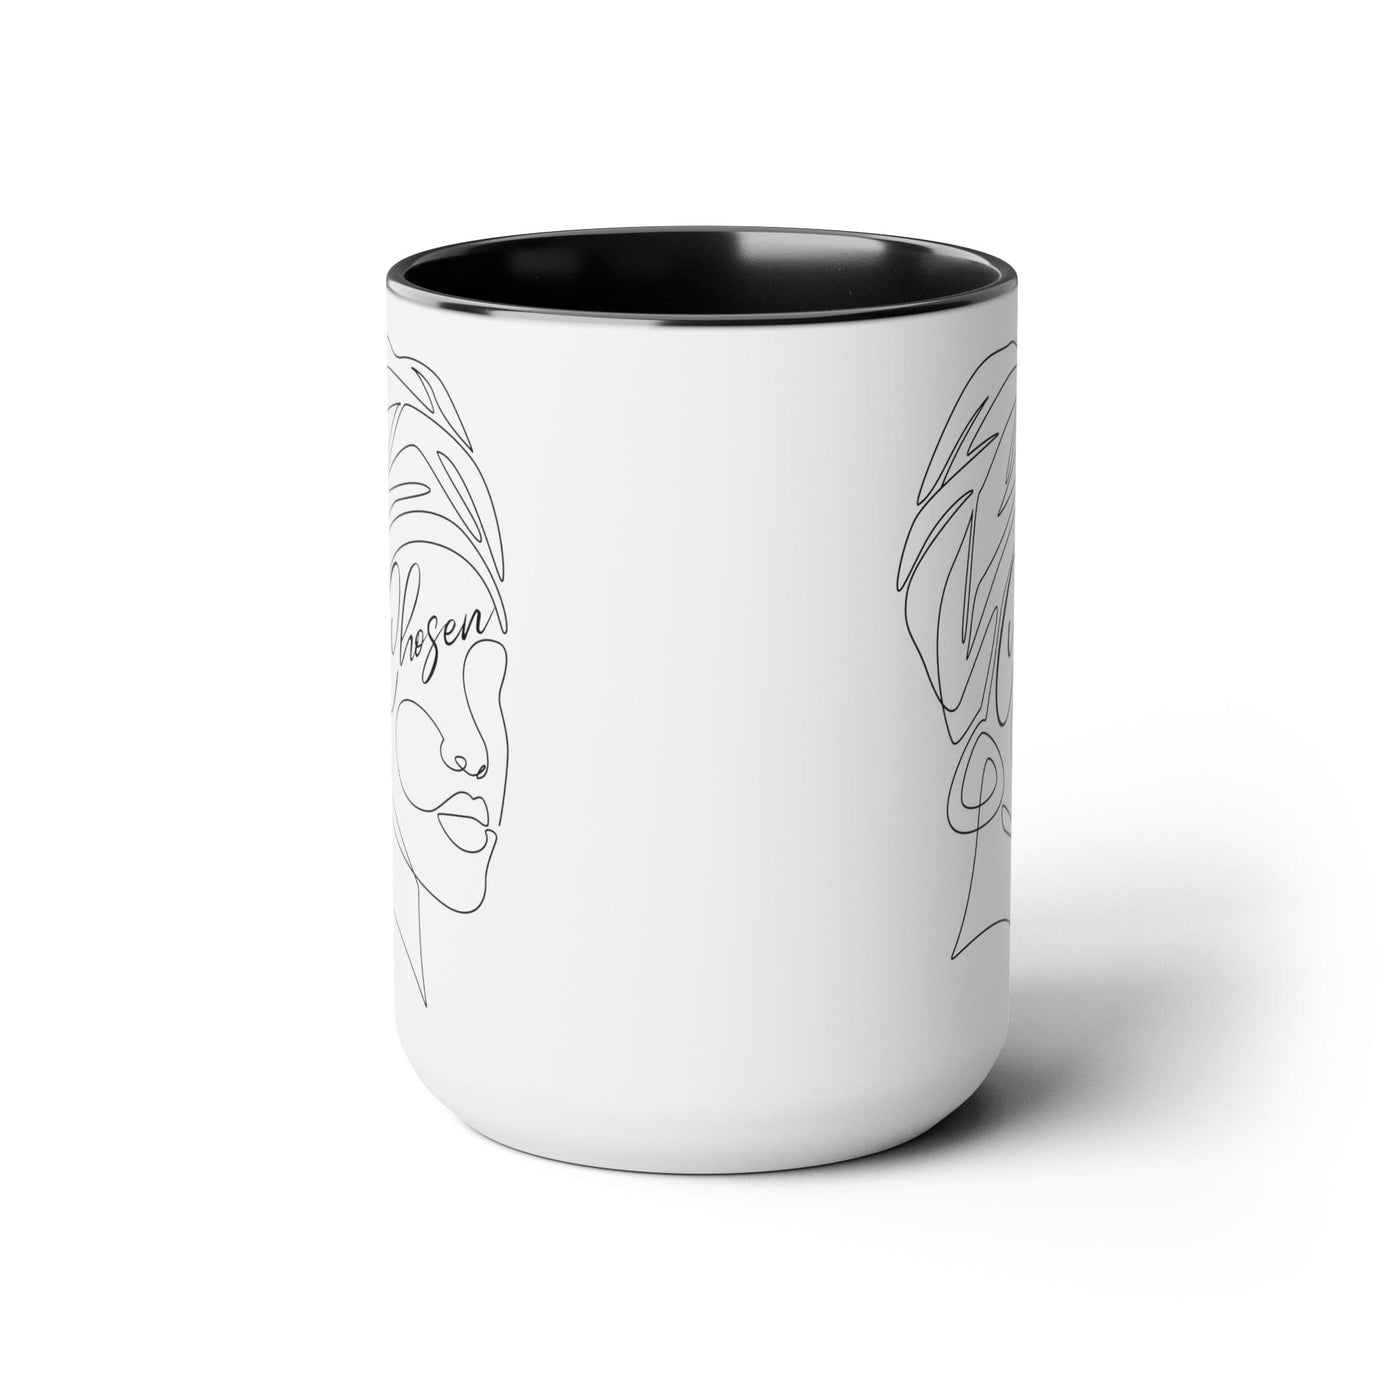 Accent Ceramic Coffee Mug 15oz - Say It Soul ’chosen’ Black Woman Line Art